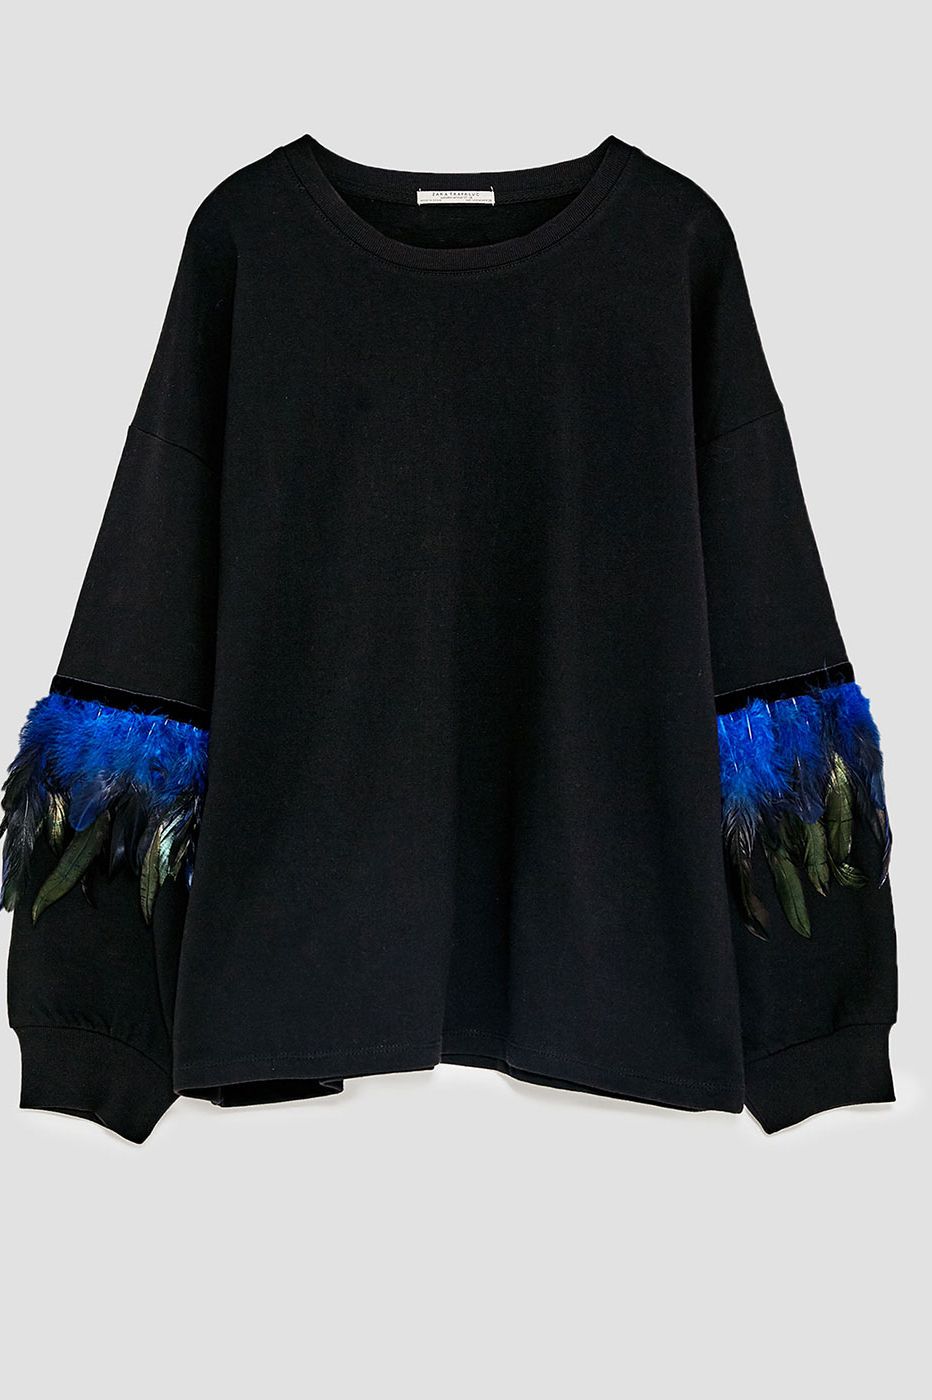 Clothing, Blue, Black, Sleeve, Cobalt blue, Outerwear, Electric blue, Blouse, Top, T-shirt, 